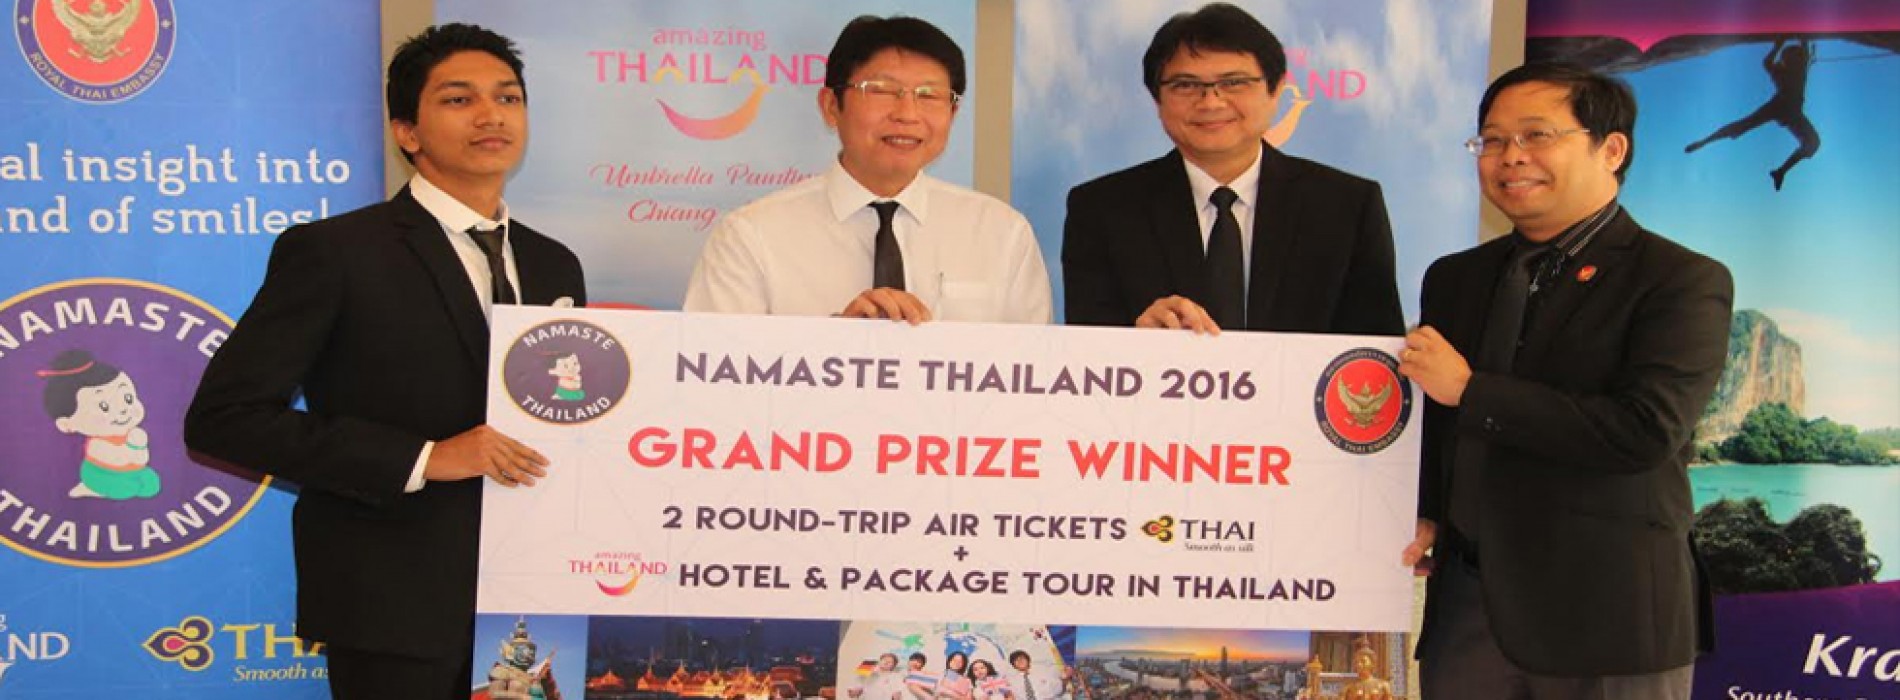 Namaste Thailand 2016 – Discovery of “Modern Thailand” via Social Media